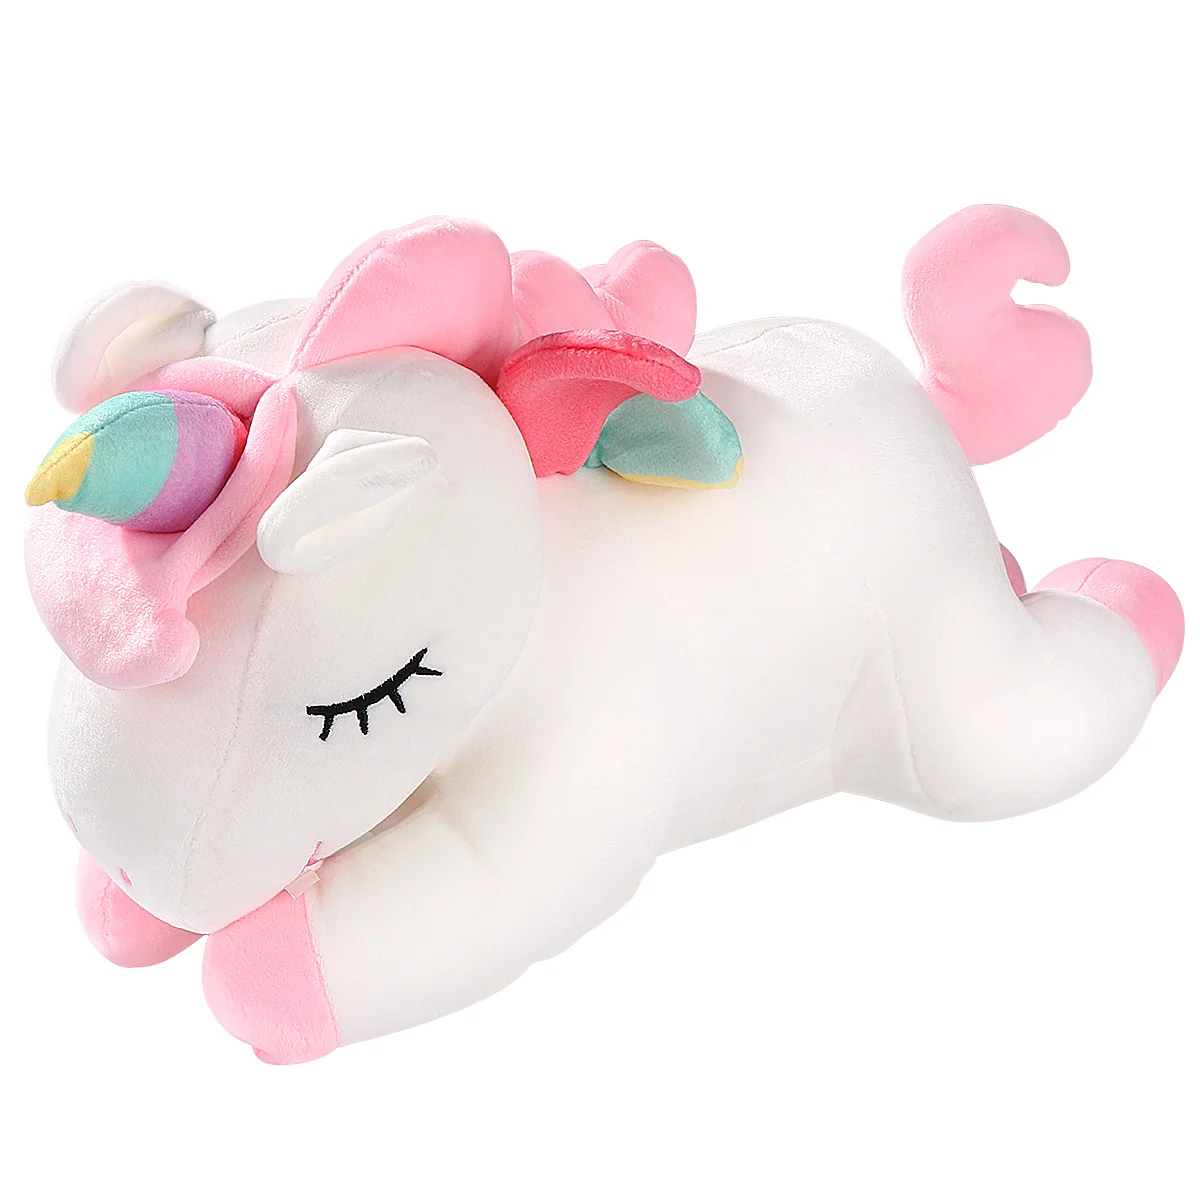 

TOYMYTOY Unicorn Stuffed Animal Plush Toy Pacified Plush Toys for Kids Children (40CM)